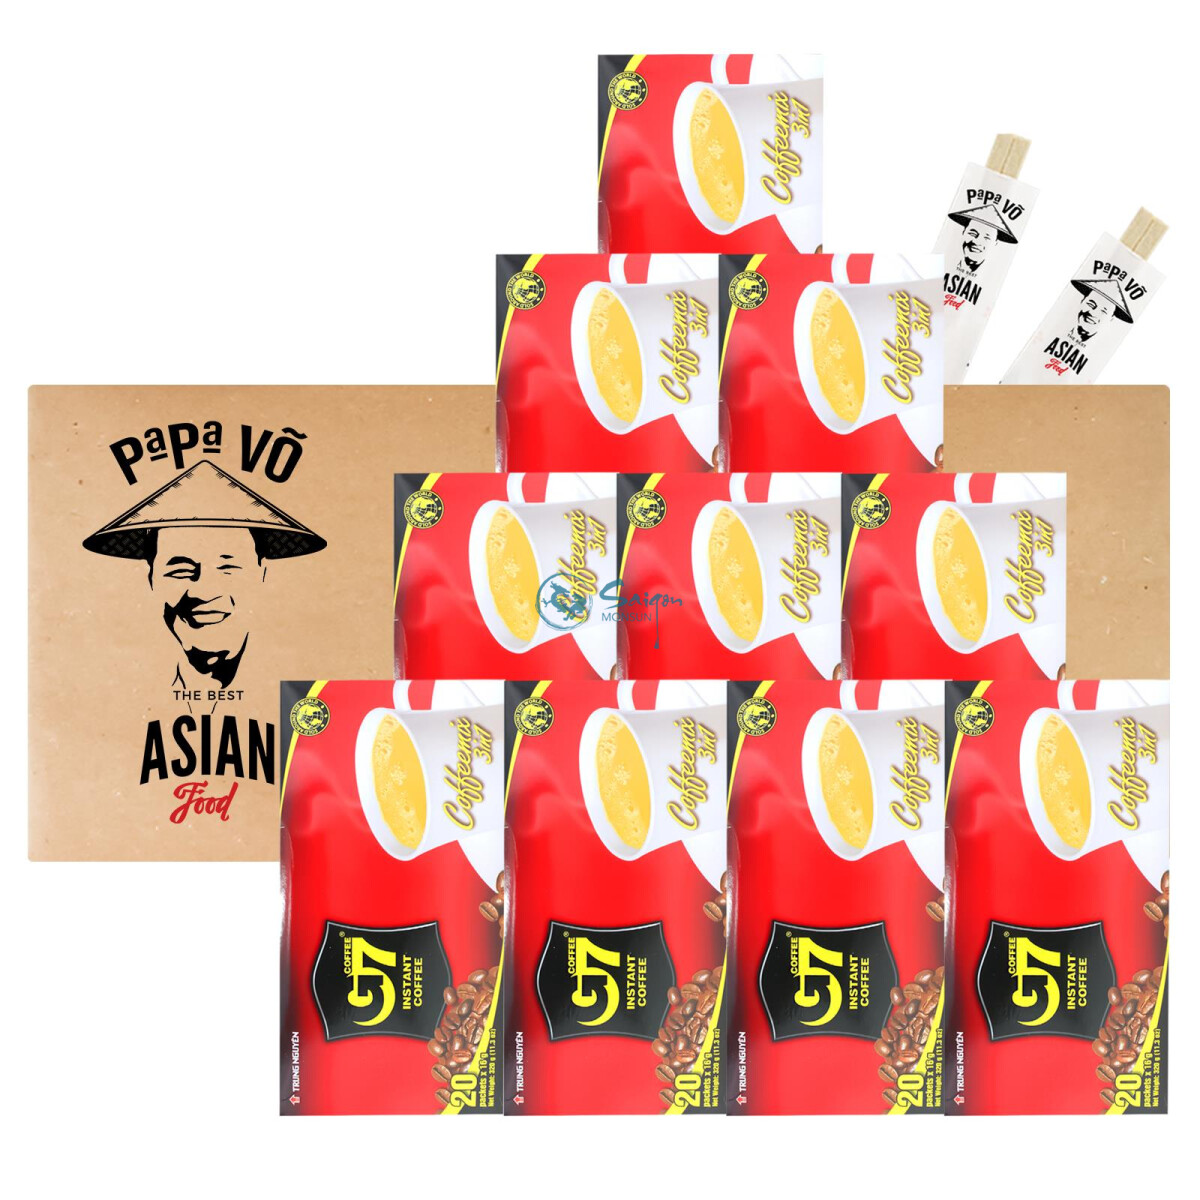 10er Pack (10x320g) Trung Nguyen G7 Kaffee 3in1